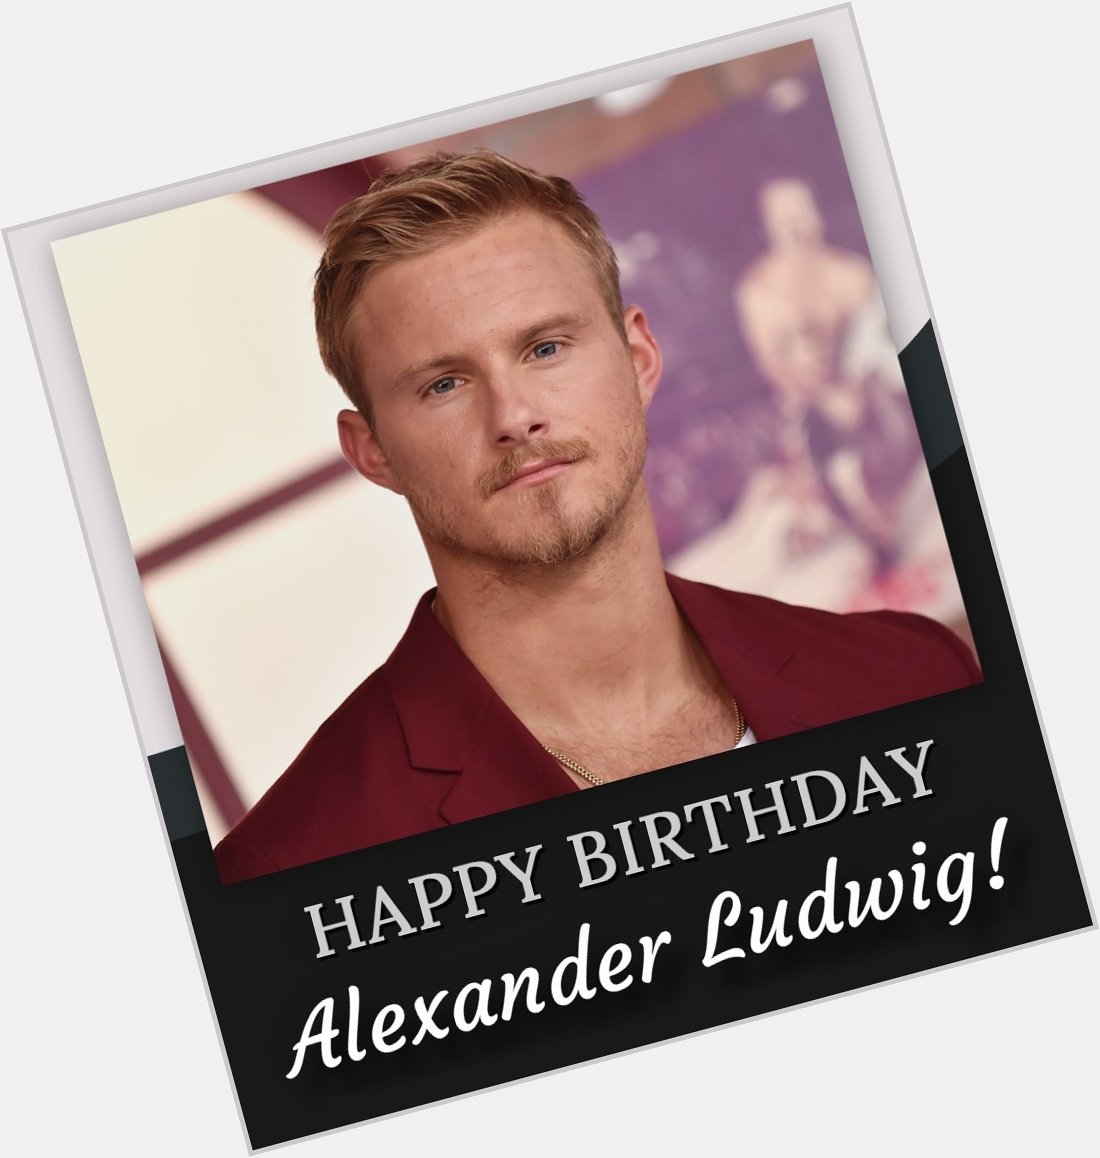 Happy birthday, Alexander Ludwig! 